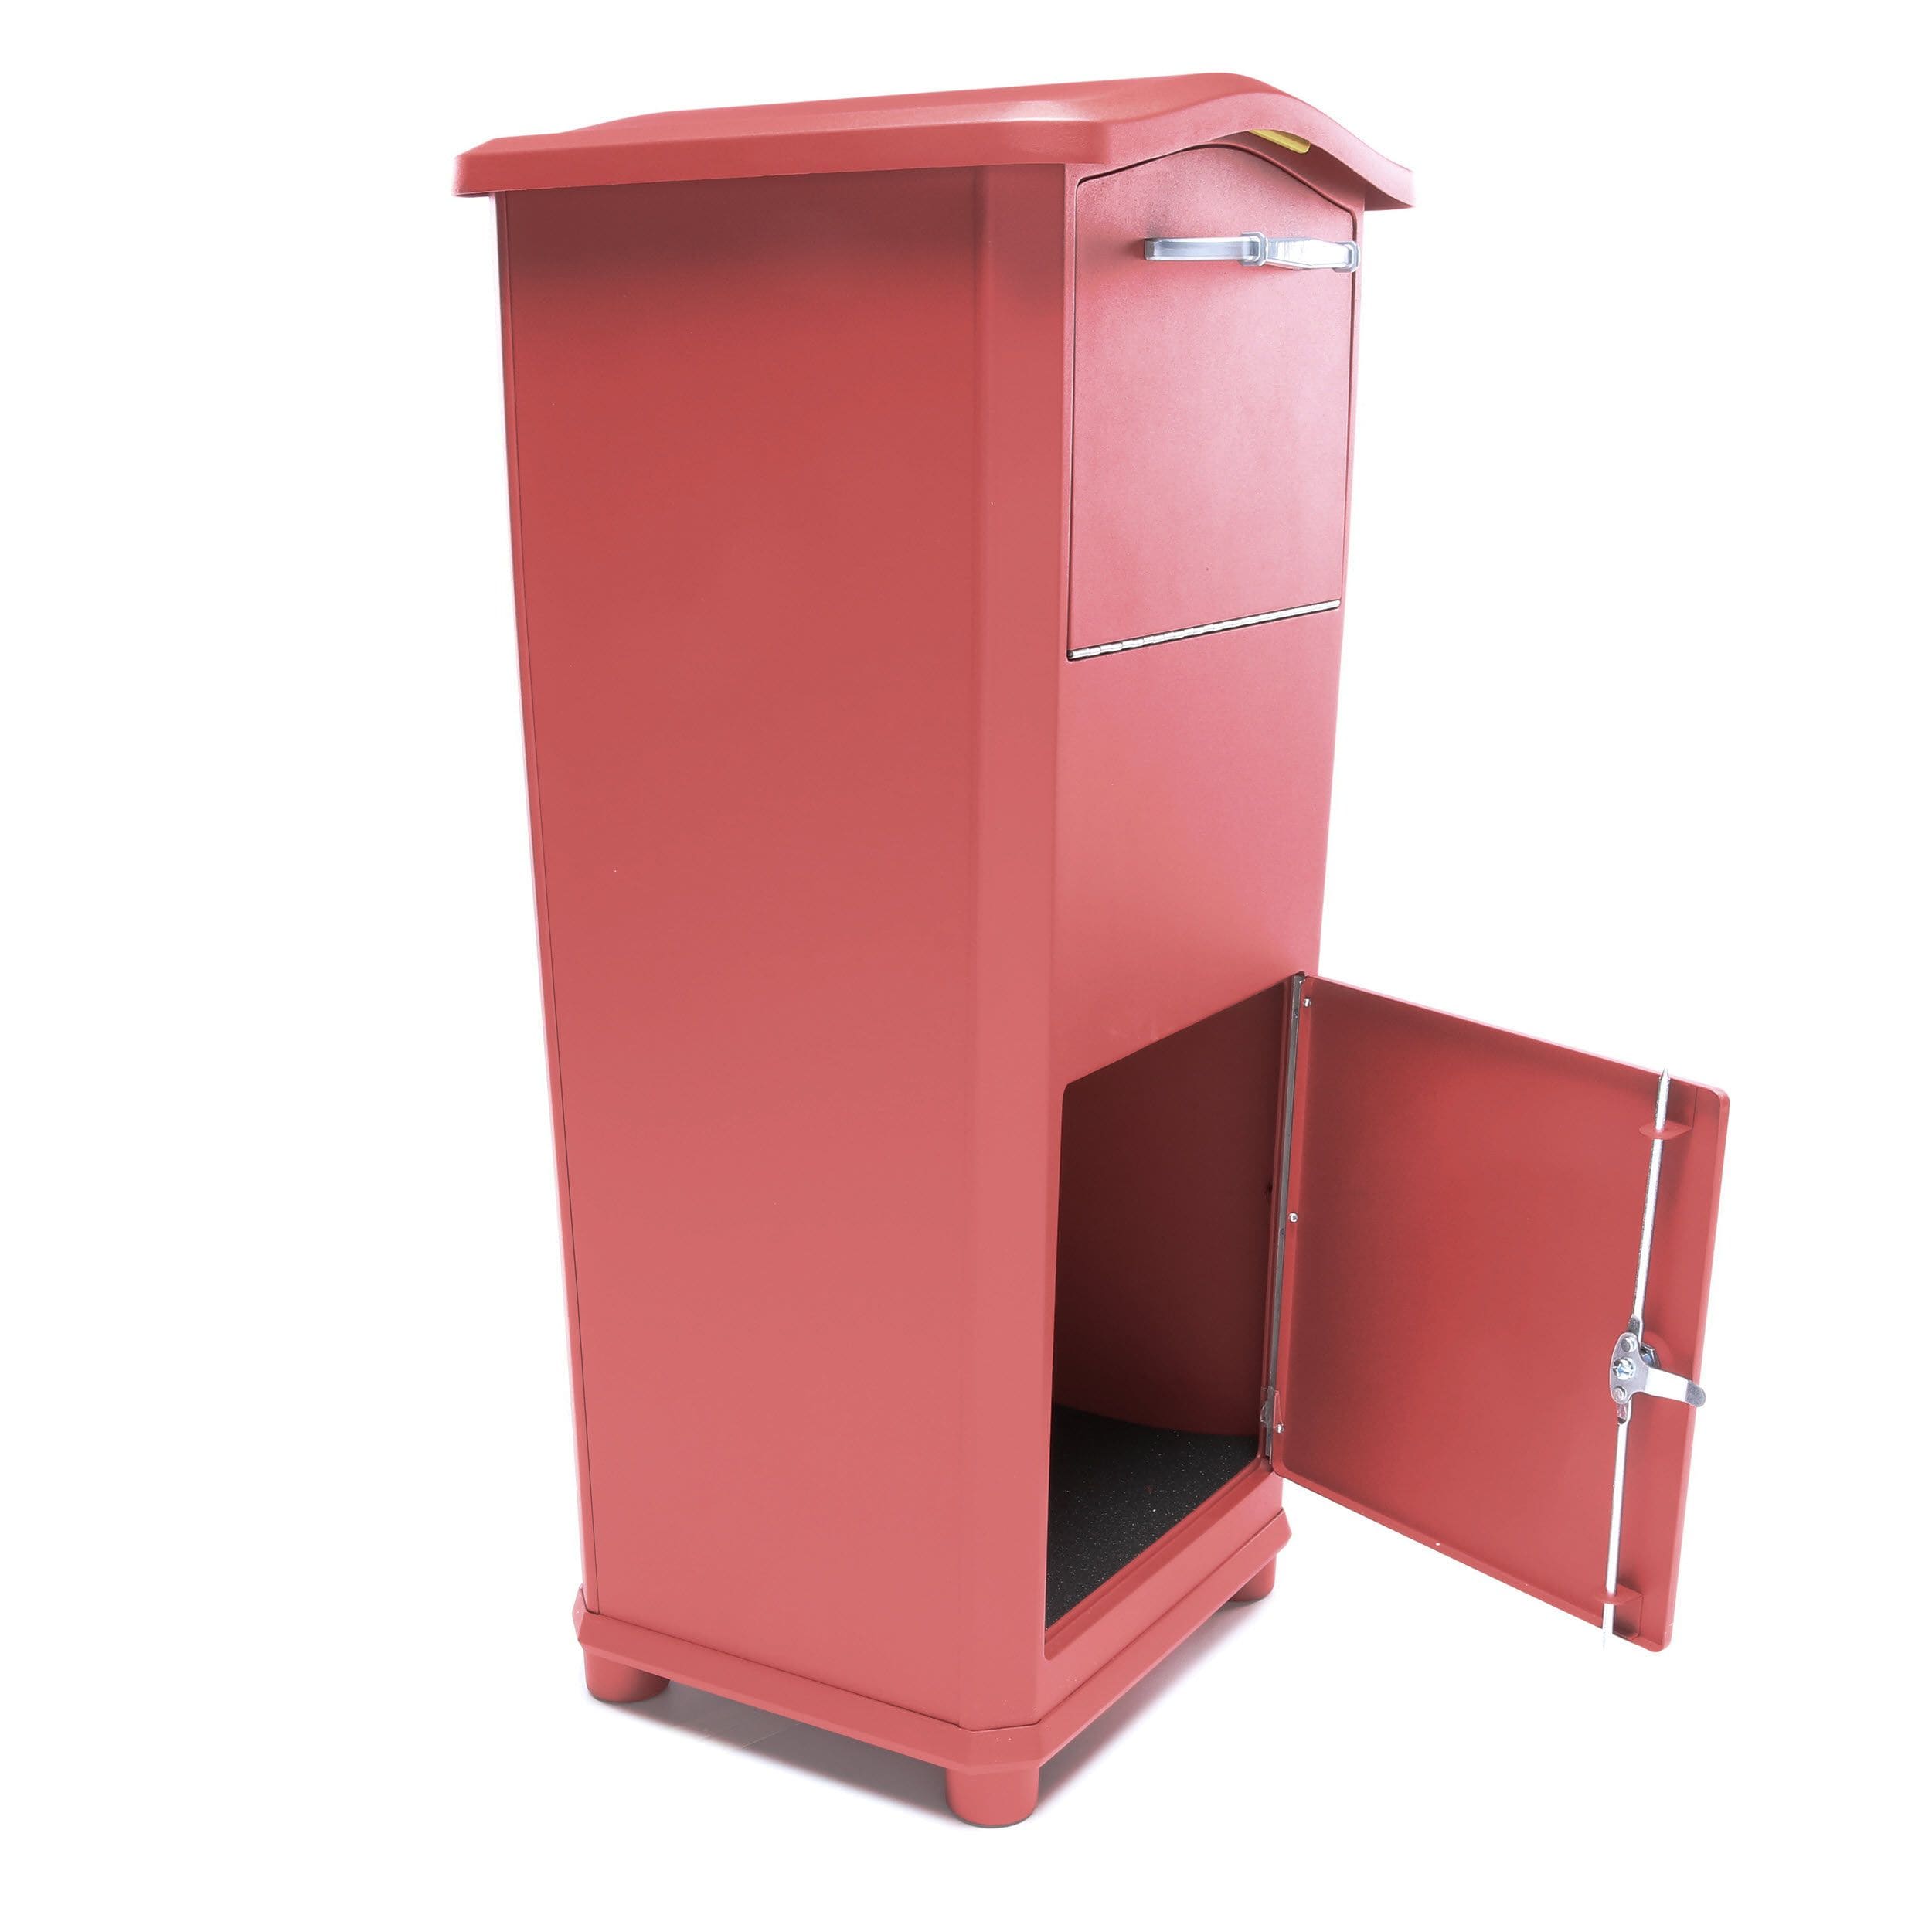 Architectural Mailboxes 6900R Elephantrunk Parcel Drop Box Red